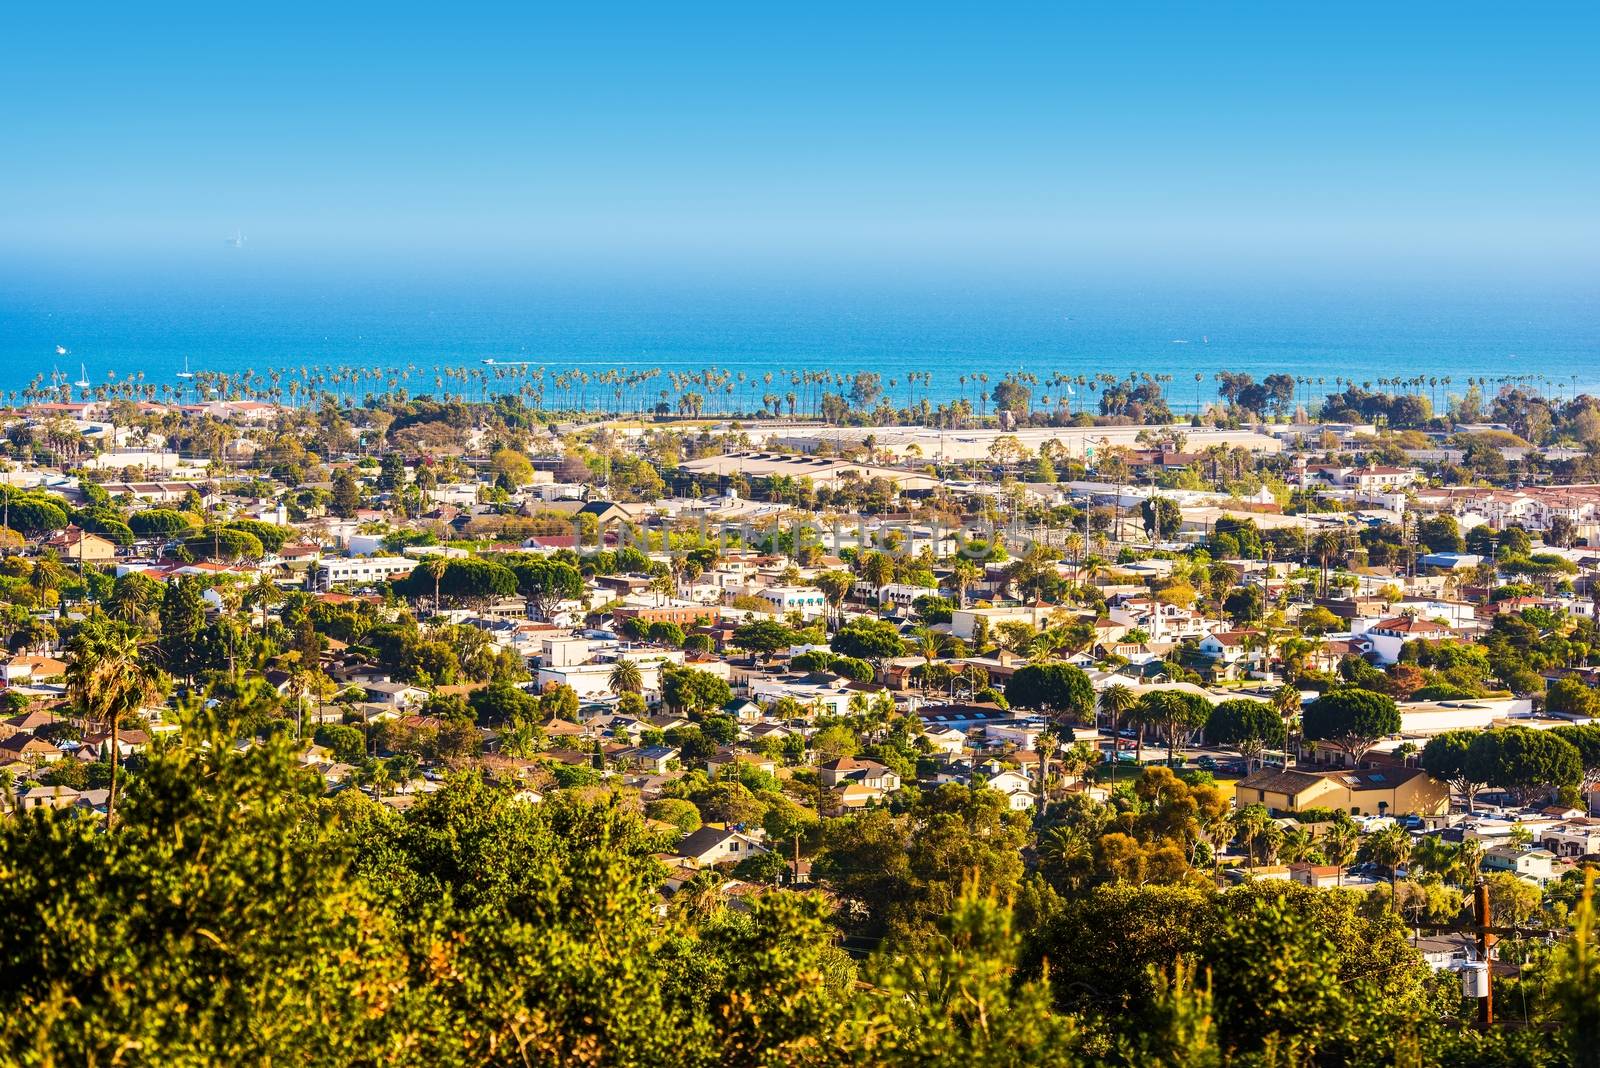 Santa Barbara California Panorama. Cityscape Photo.